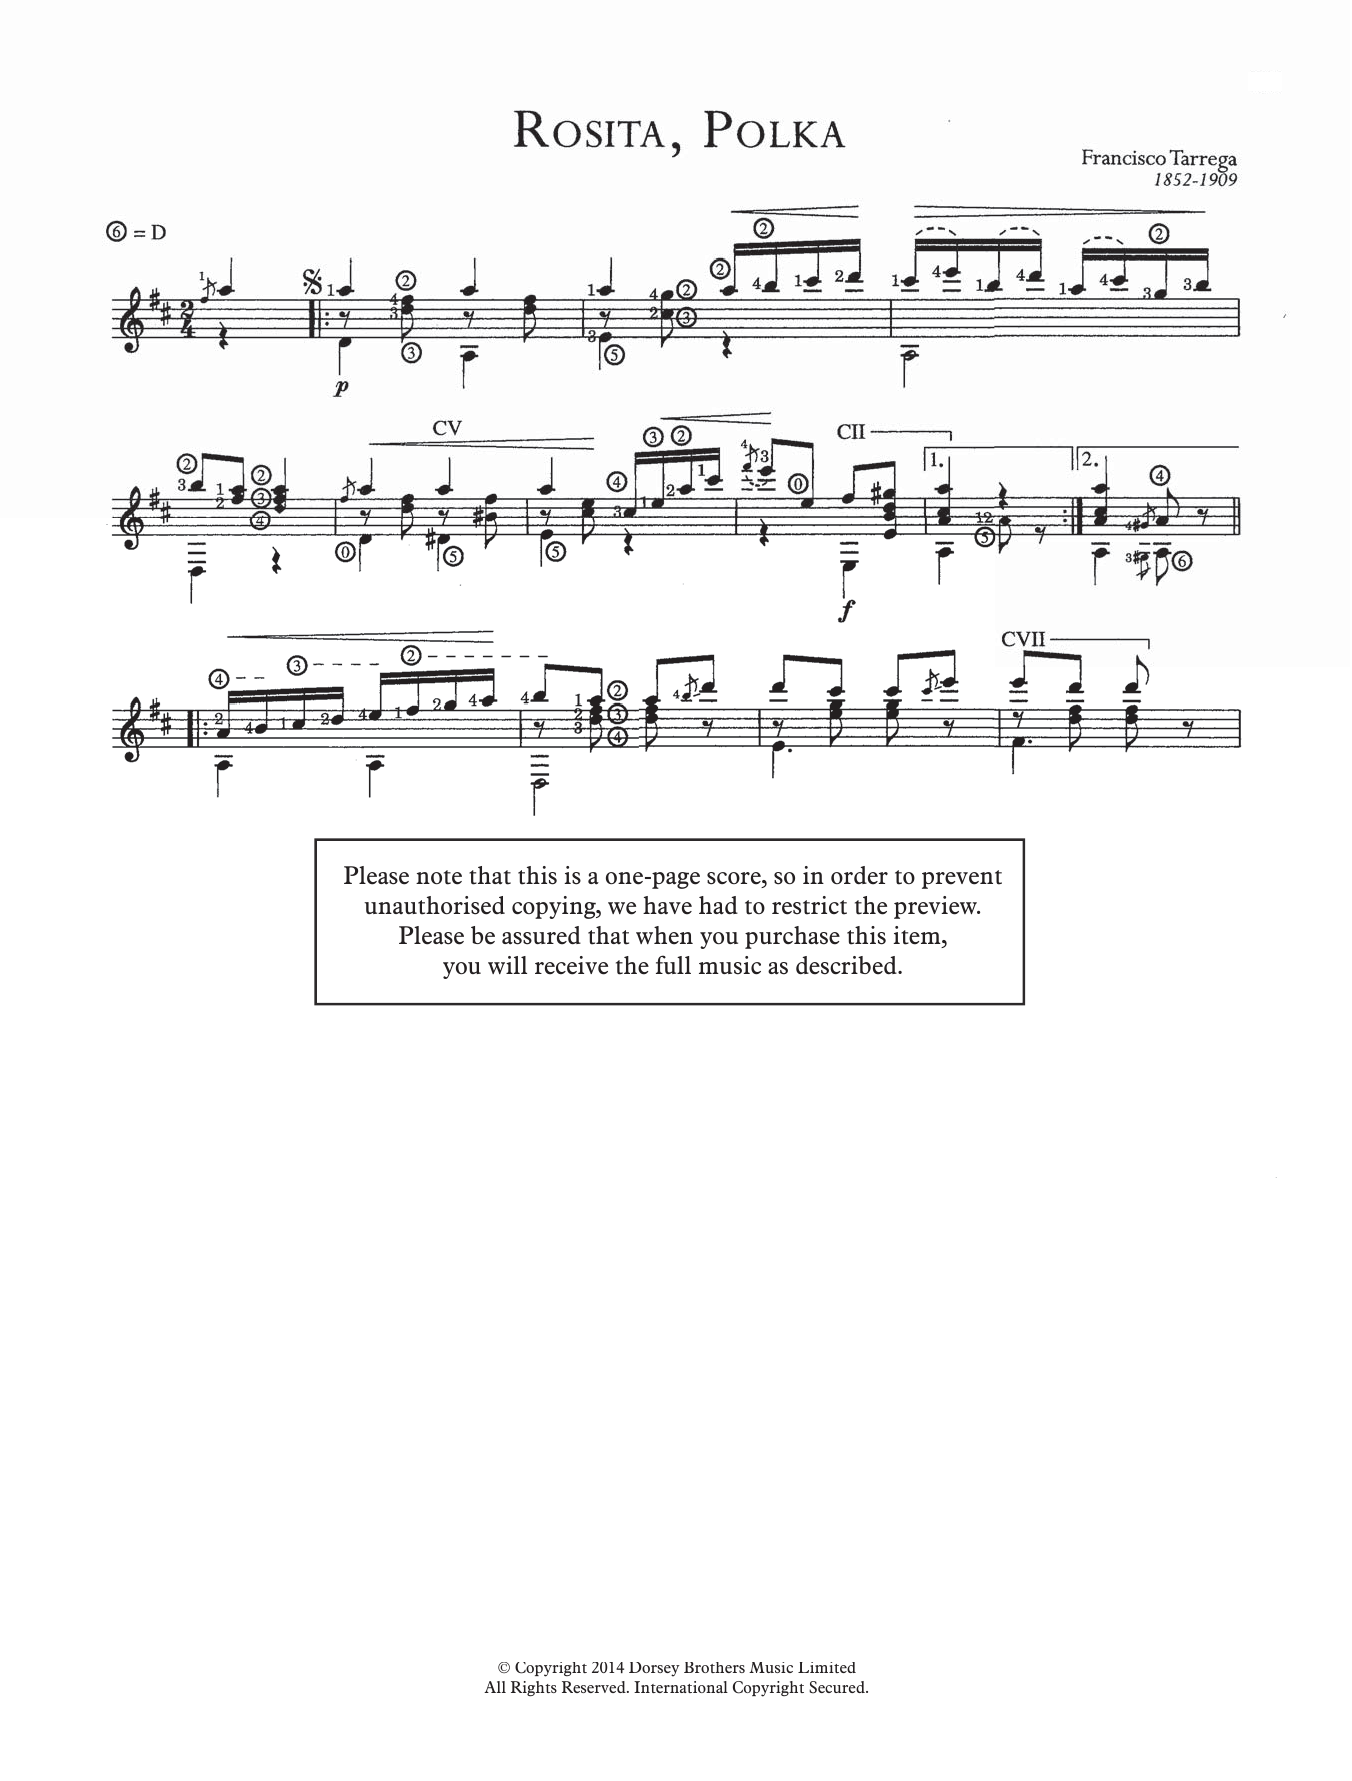 Download Francisco Tarrega Rosita, Polka Sheet Music and learn how to play Guitar PDF digital score in minutes